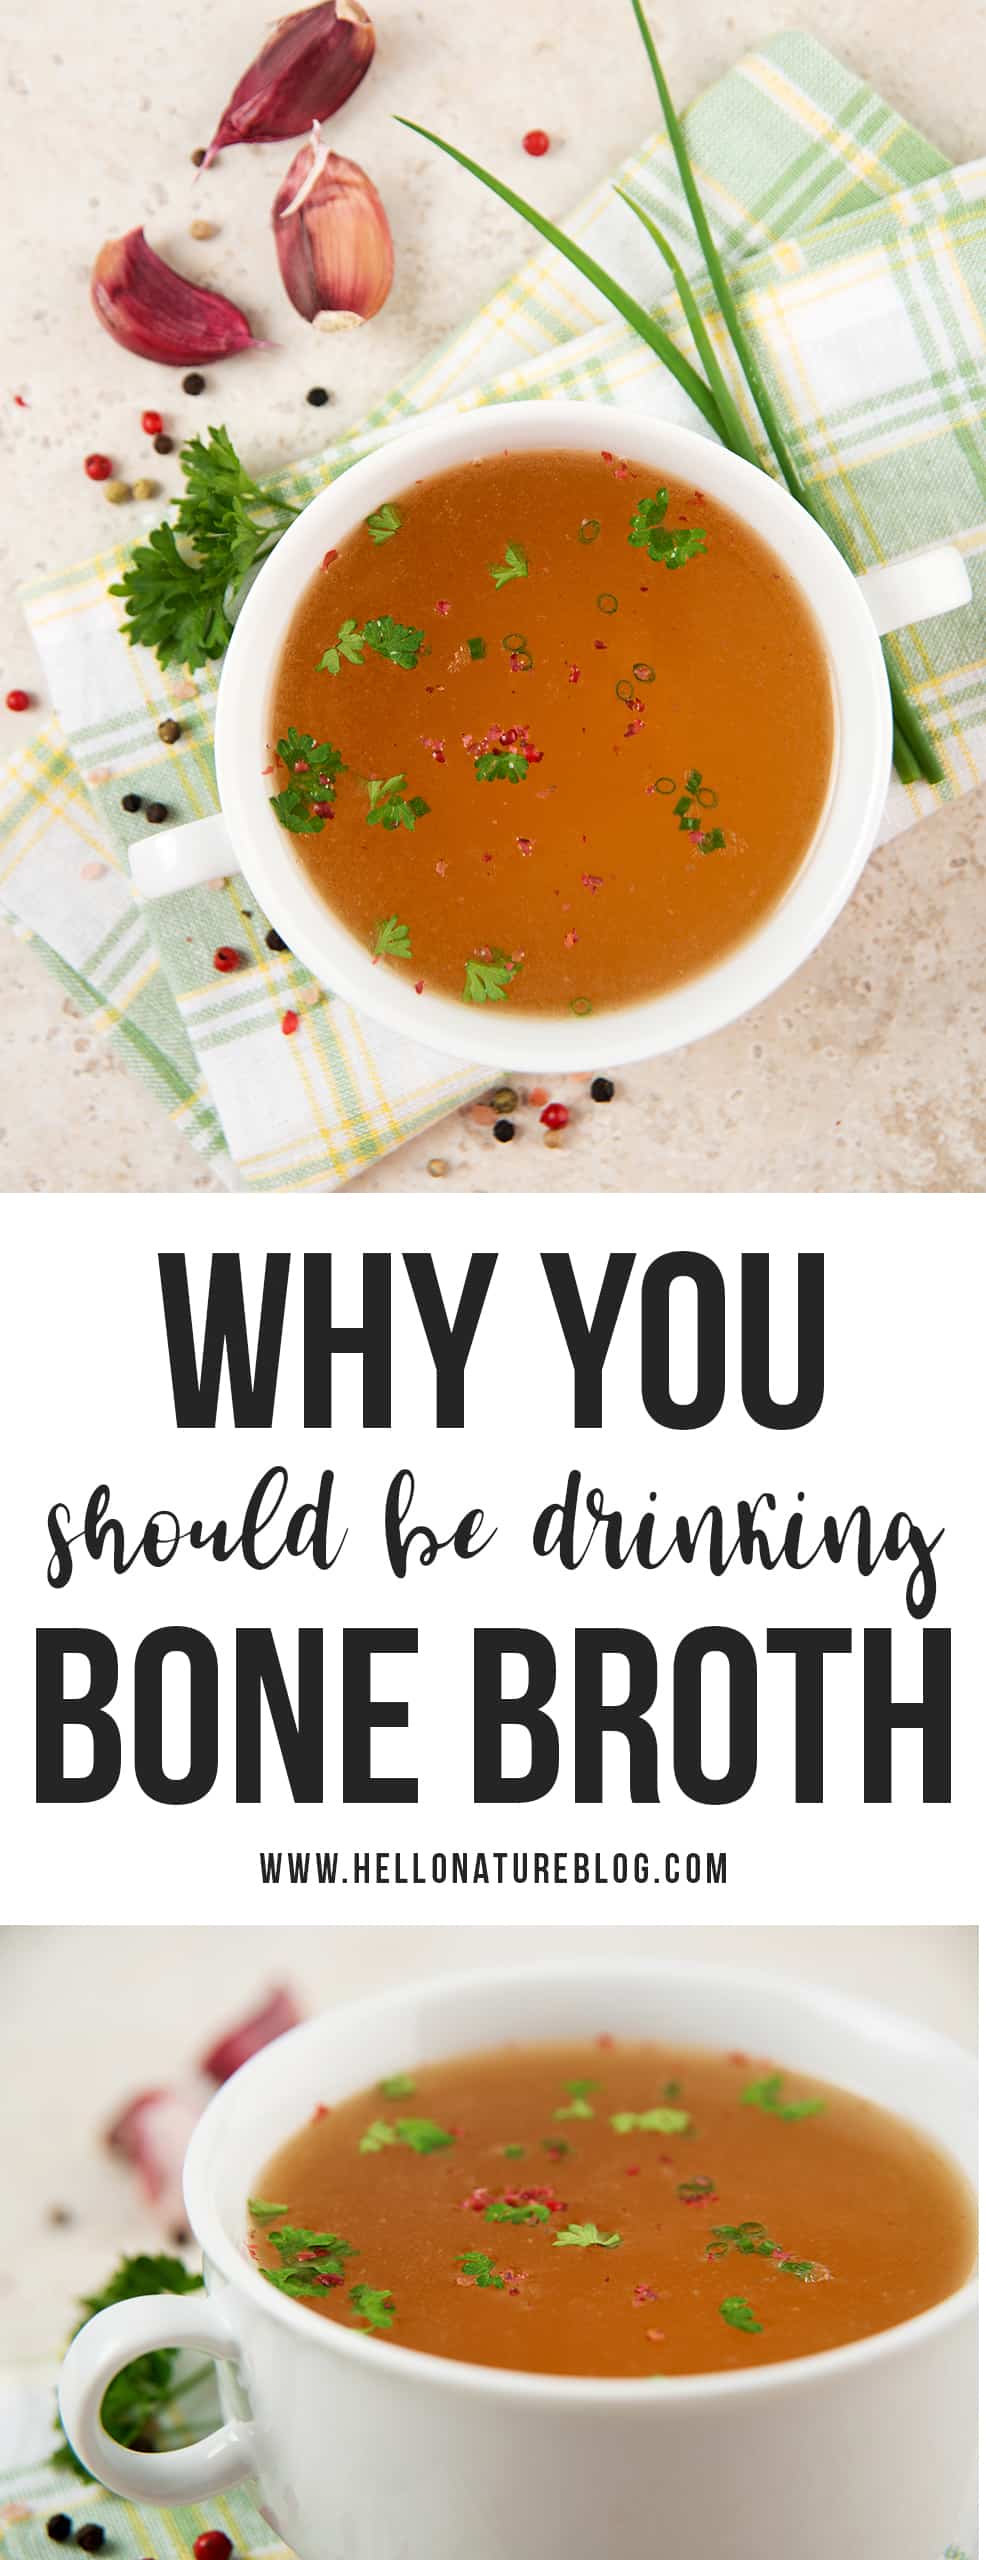 bone broth benefits